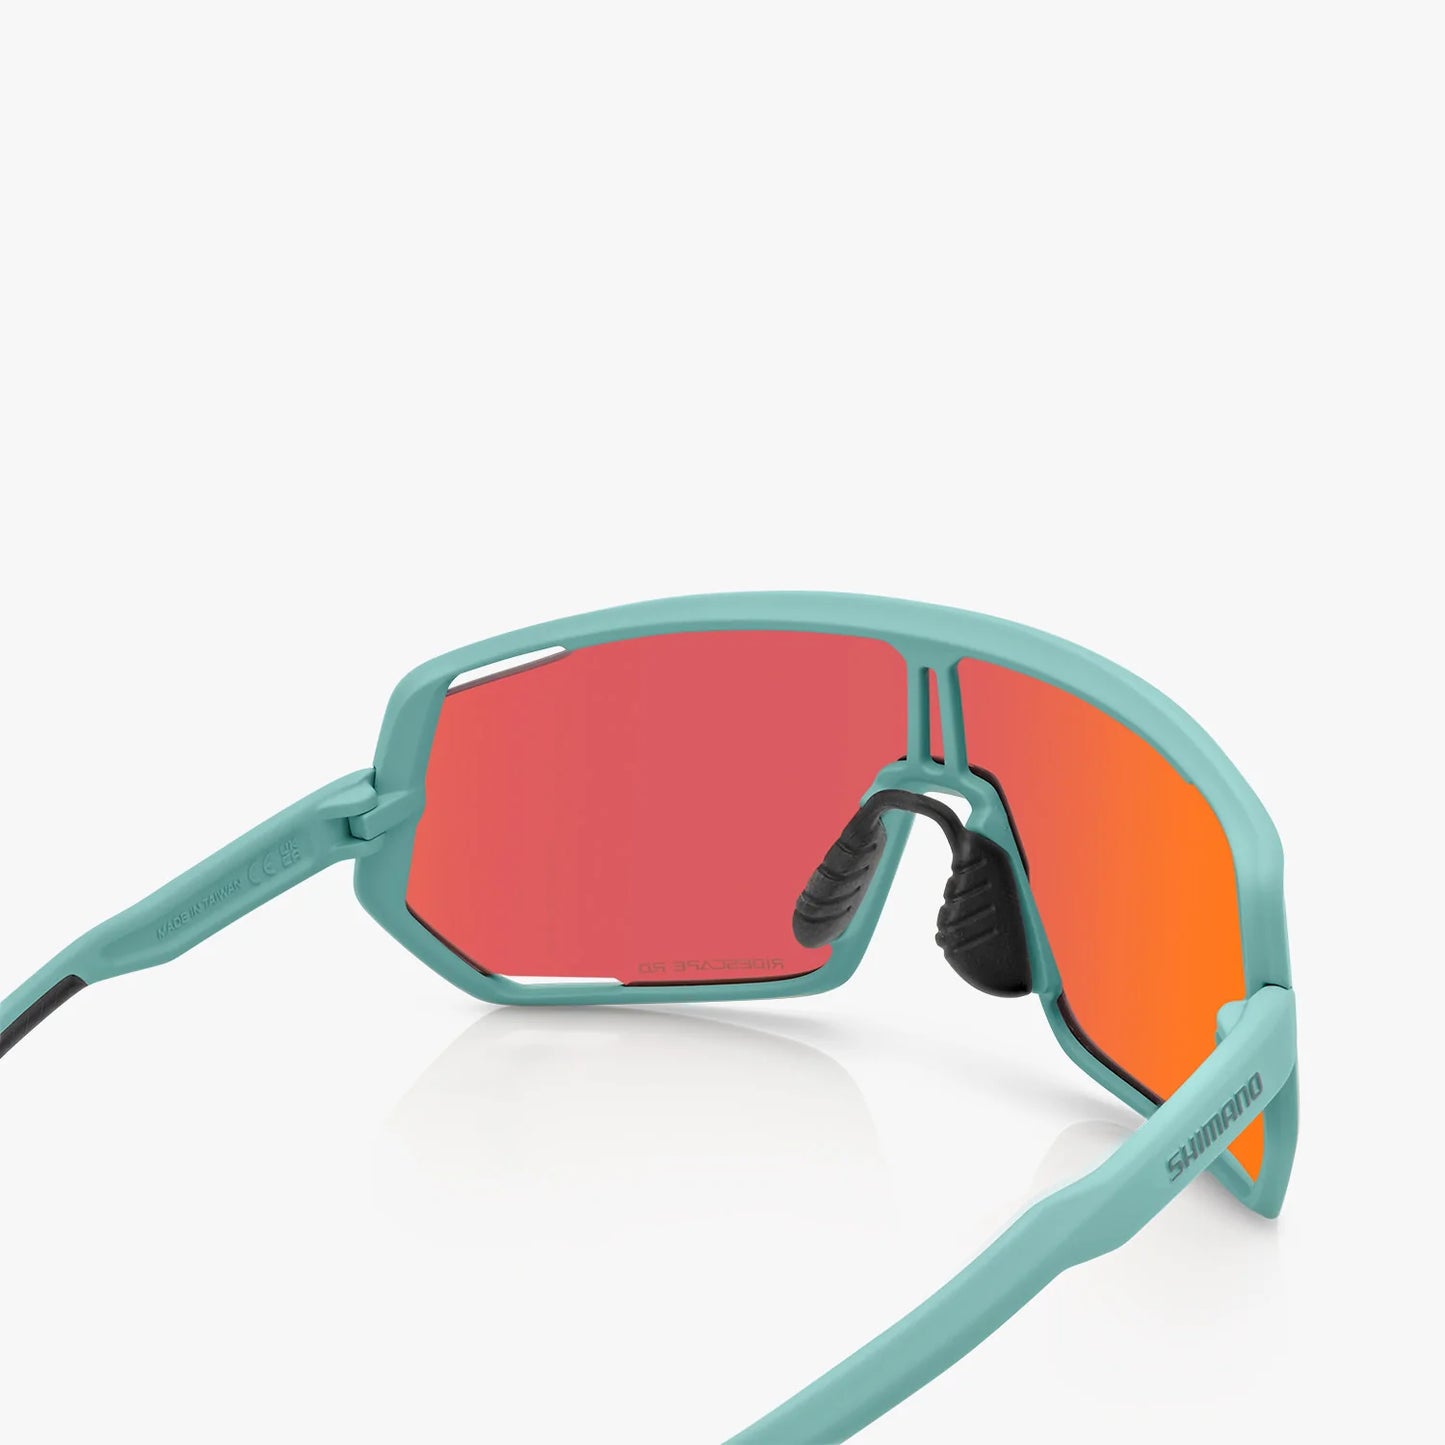 Shimano Technium 2 Sunglasses - Teal - Ridescape Road Lens